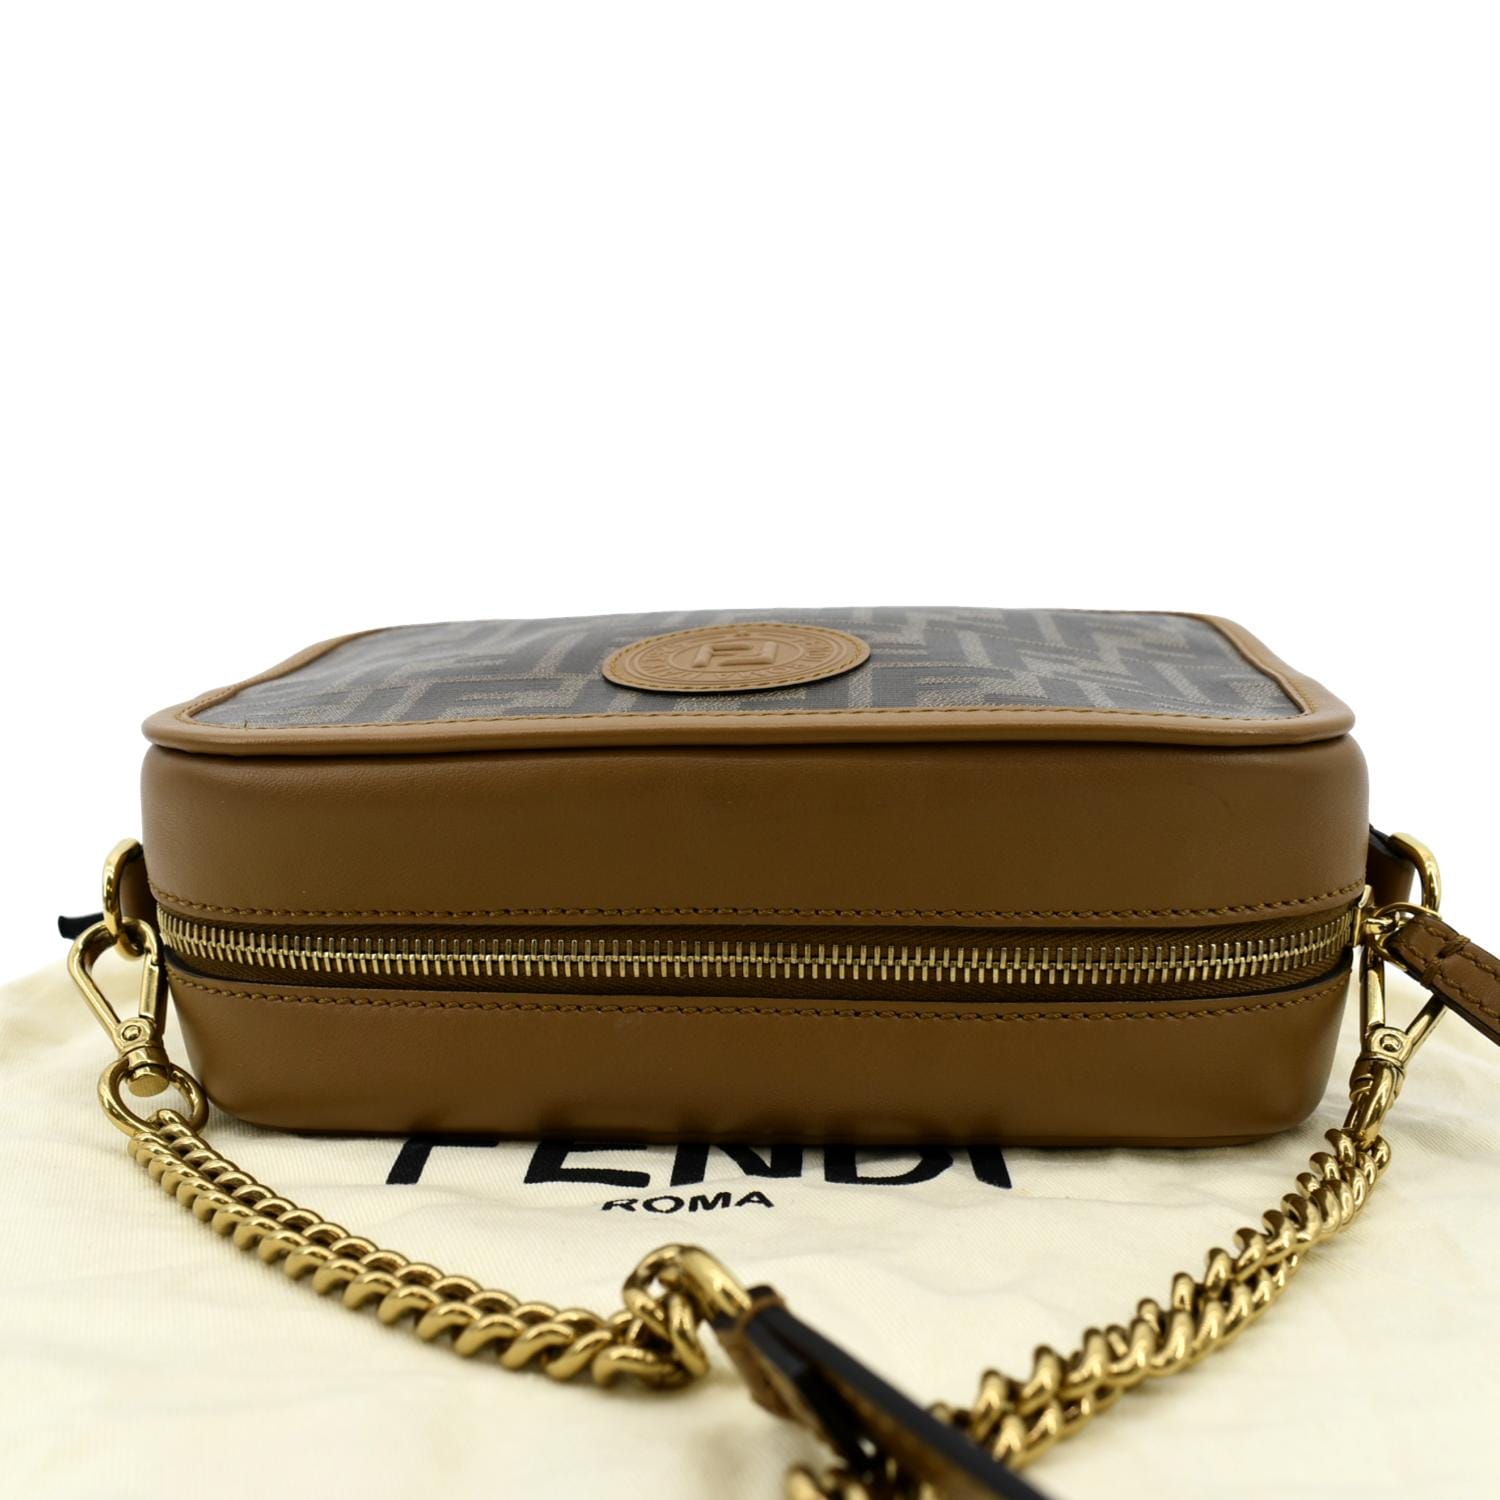 Fendi FF Logo Print Camera Case Crossbody Bag